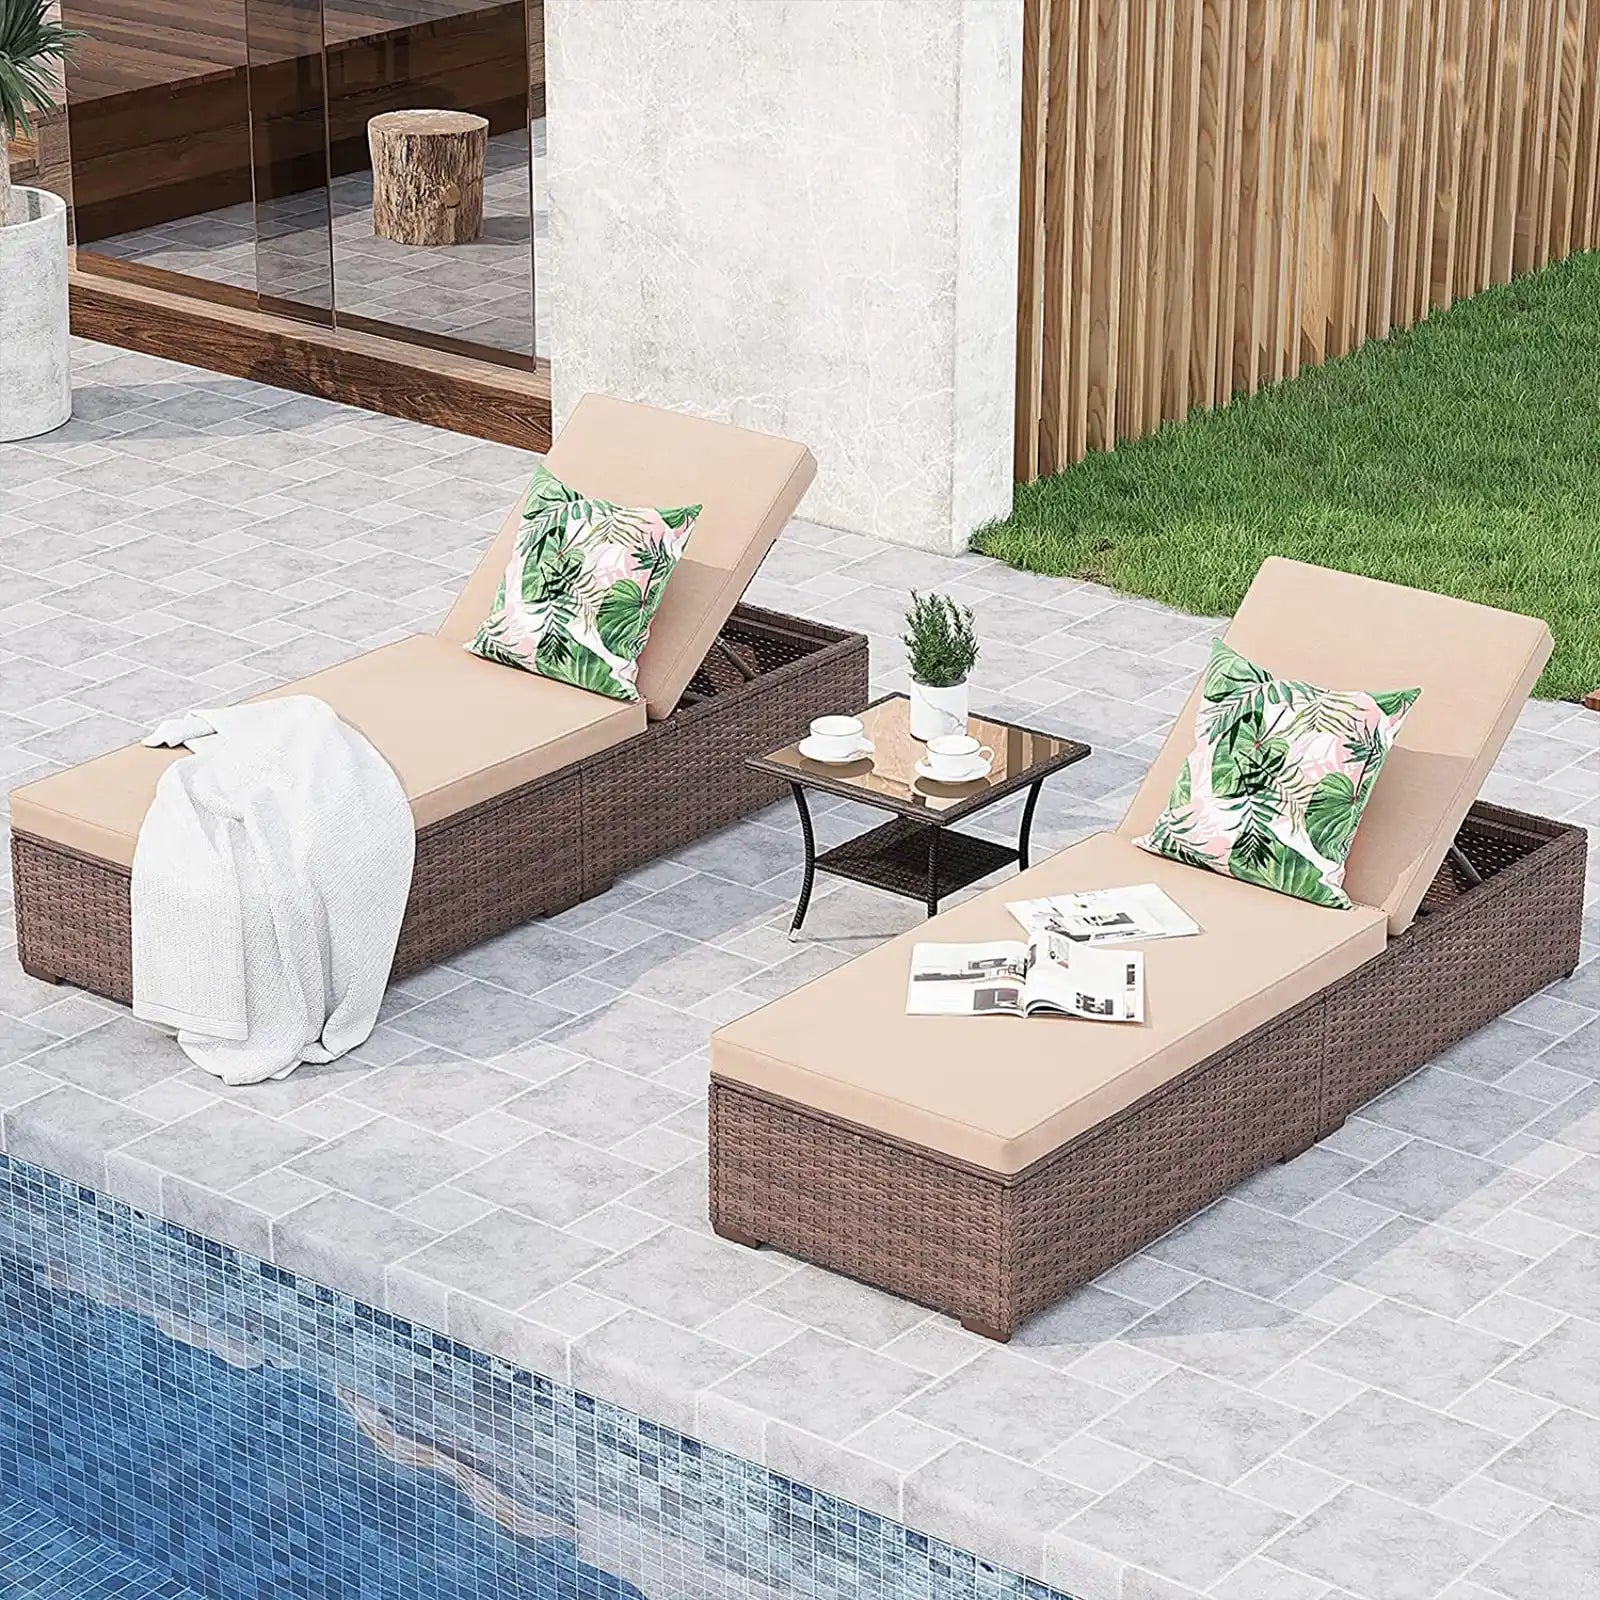 Tumbona para exteriores, tumbona reclinable para patio, sillón ajustable de mimbre marrón, estructura de acero con cojines beige extraíbles, para piscina, terraza y patio trasero